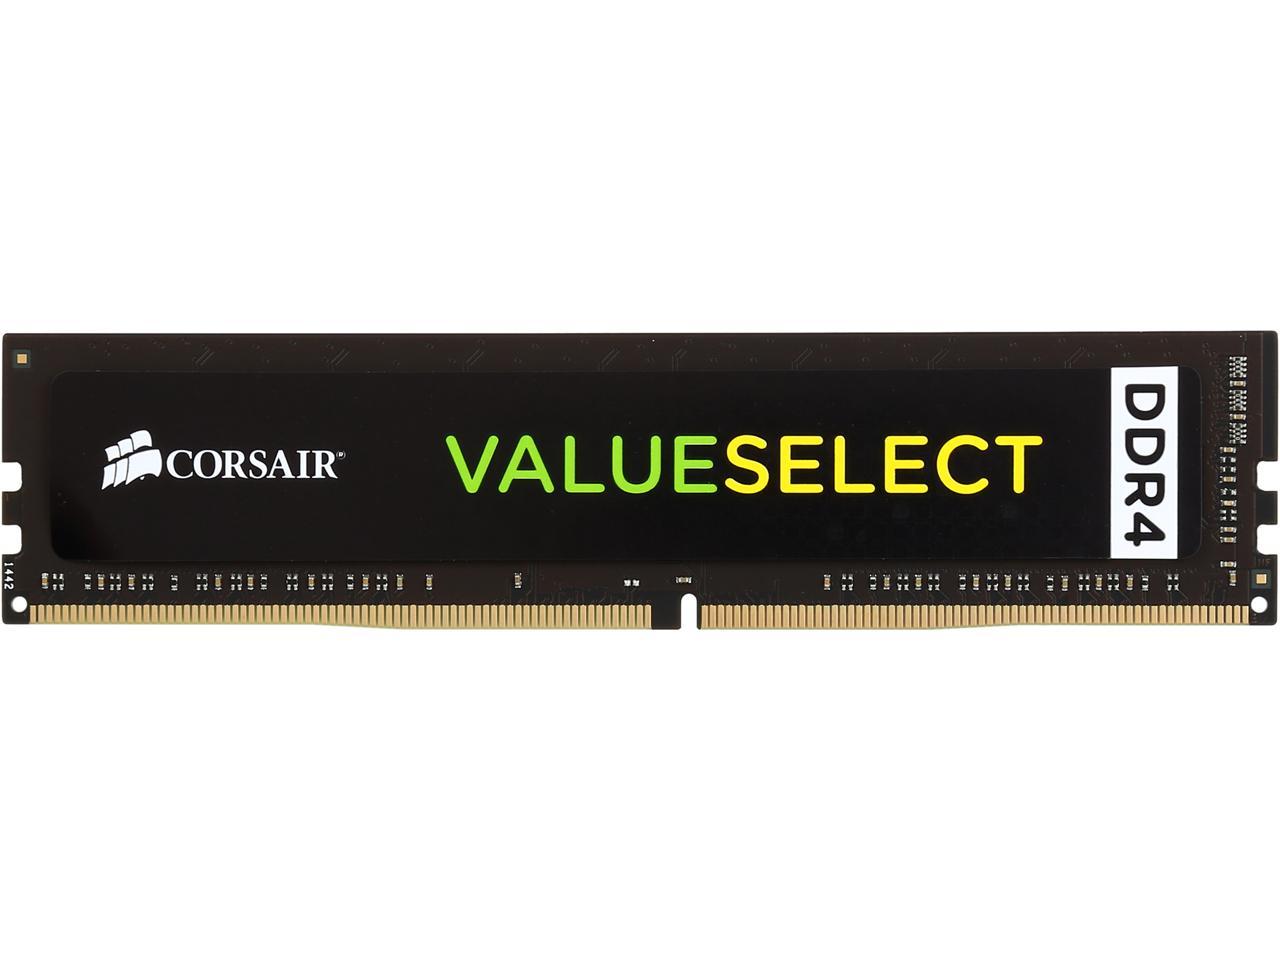 DDR4 2133Mhz CL15 Standard Desktop Memory Schwarz Corsair CMV4GX4M1A2133C15 Value Select 4GB 1x4GB 